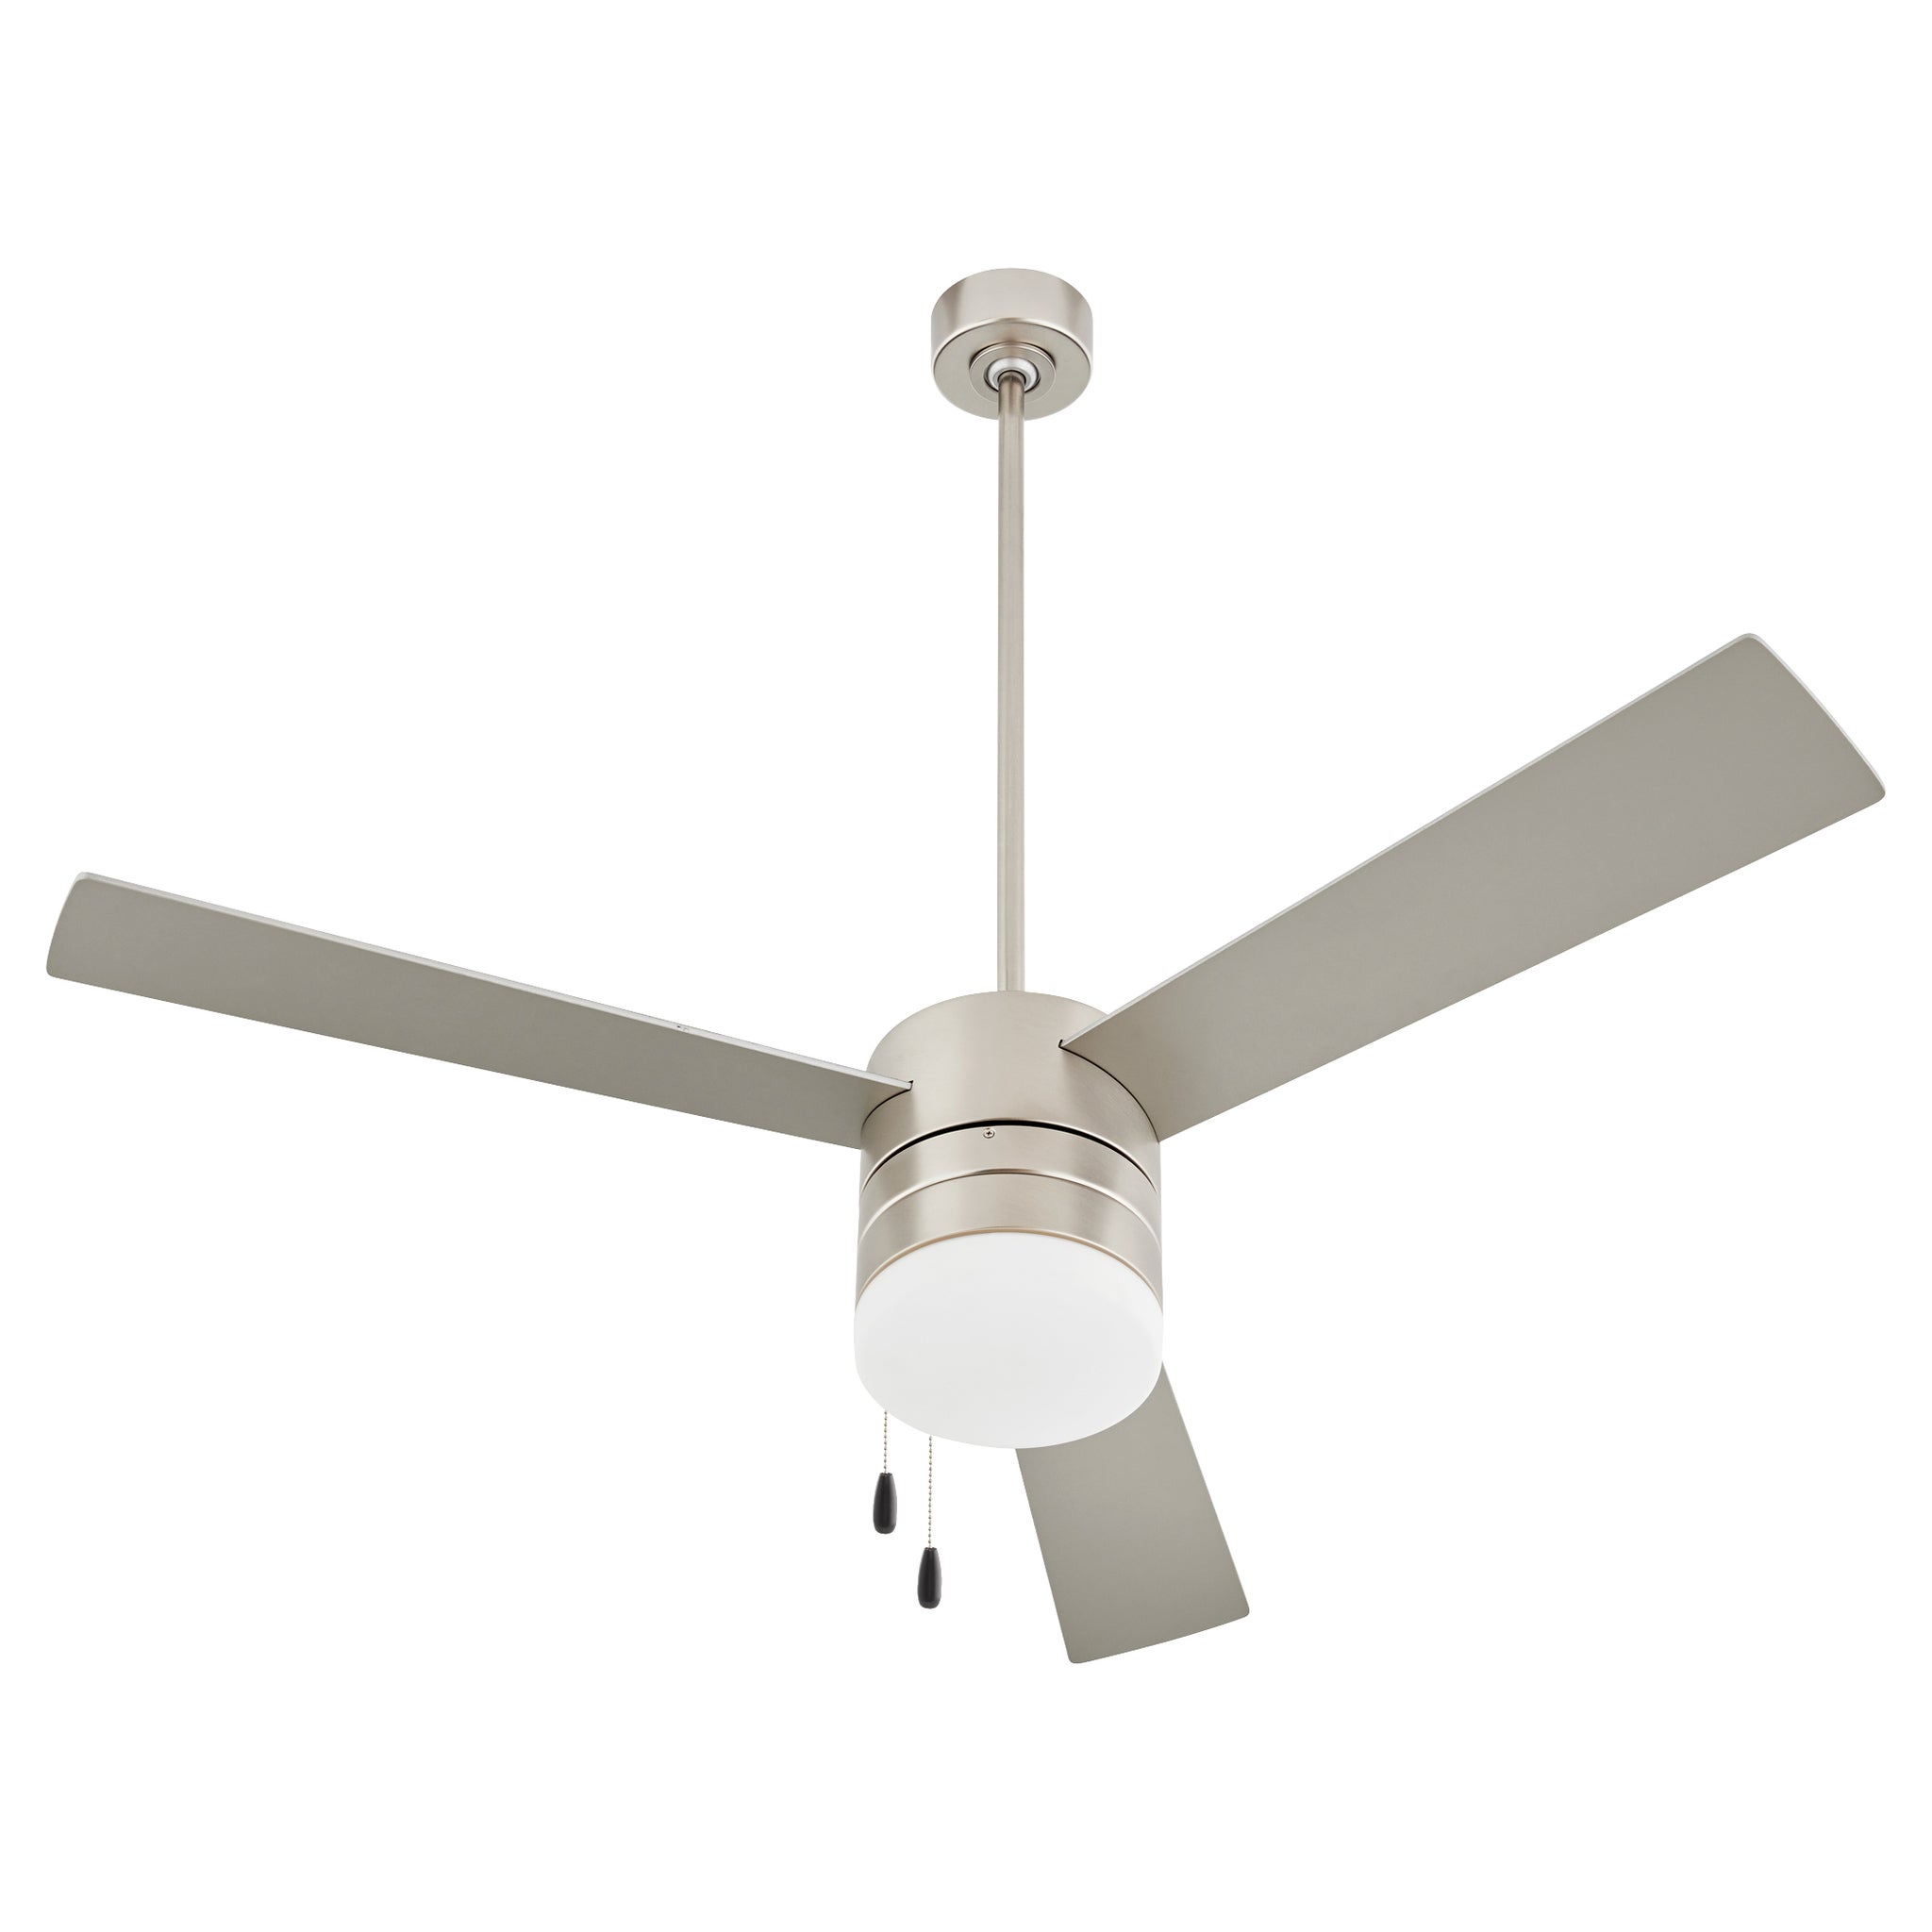 ALLEGRO 52″ 3 Blade Fan – Satin Nickel - Oxygen Lighting